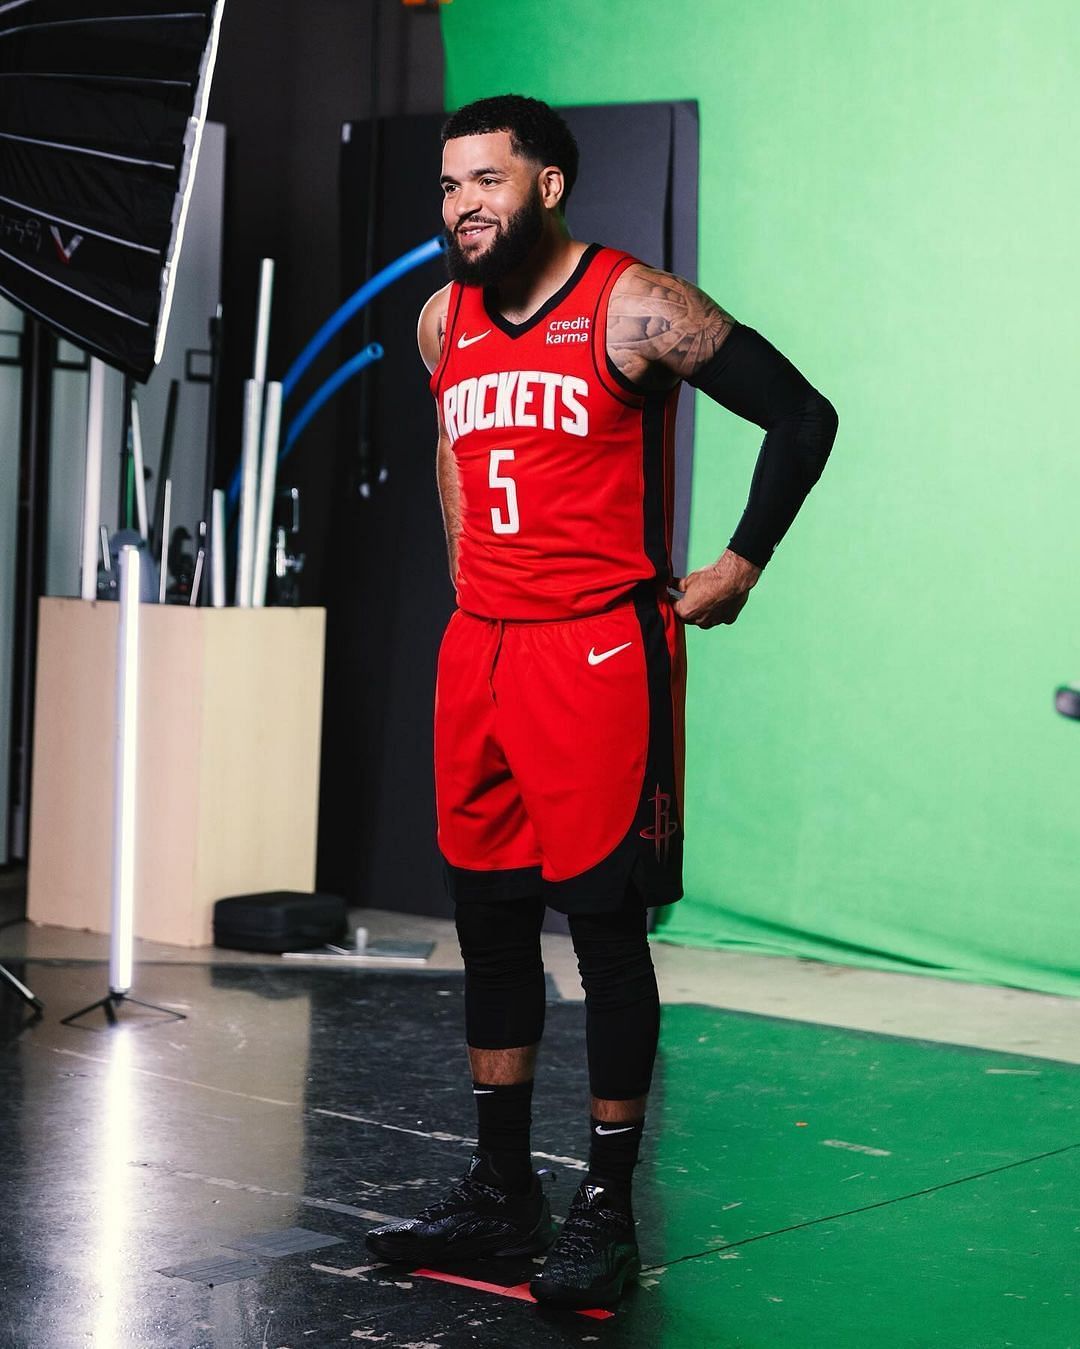 Fred VanVleet switched allegiance to the Houston Rockets in the summer (via Instagram)